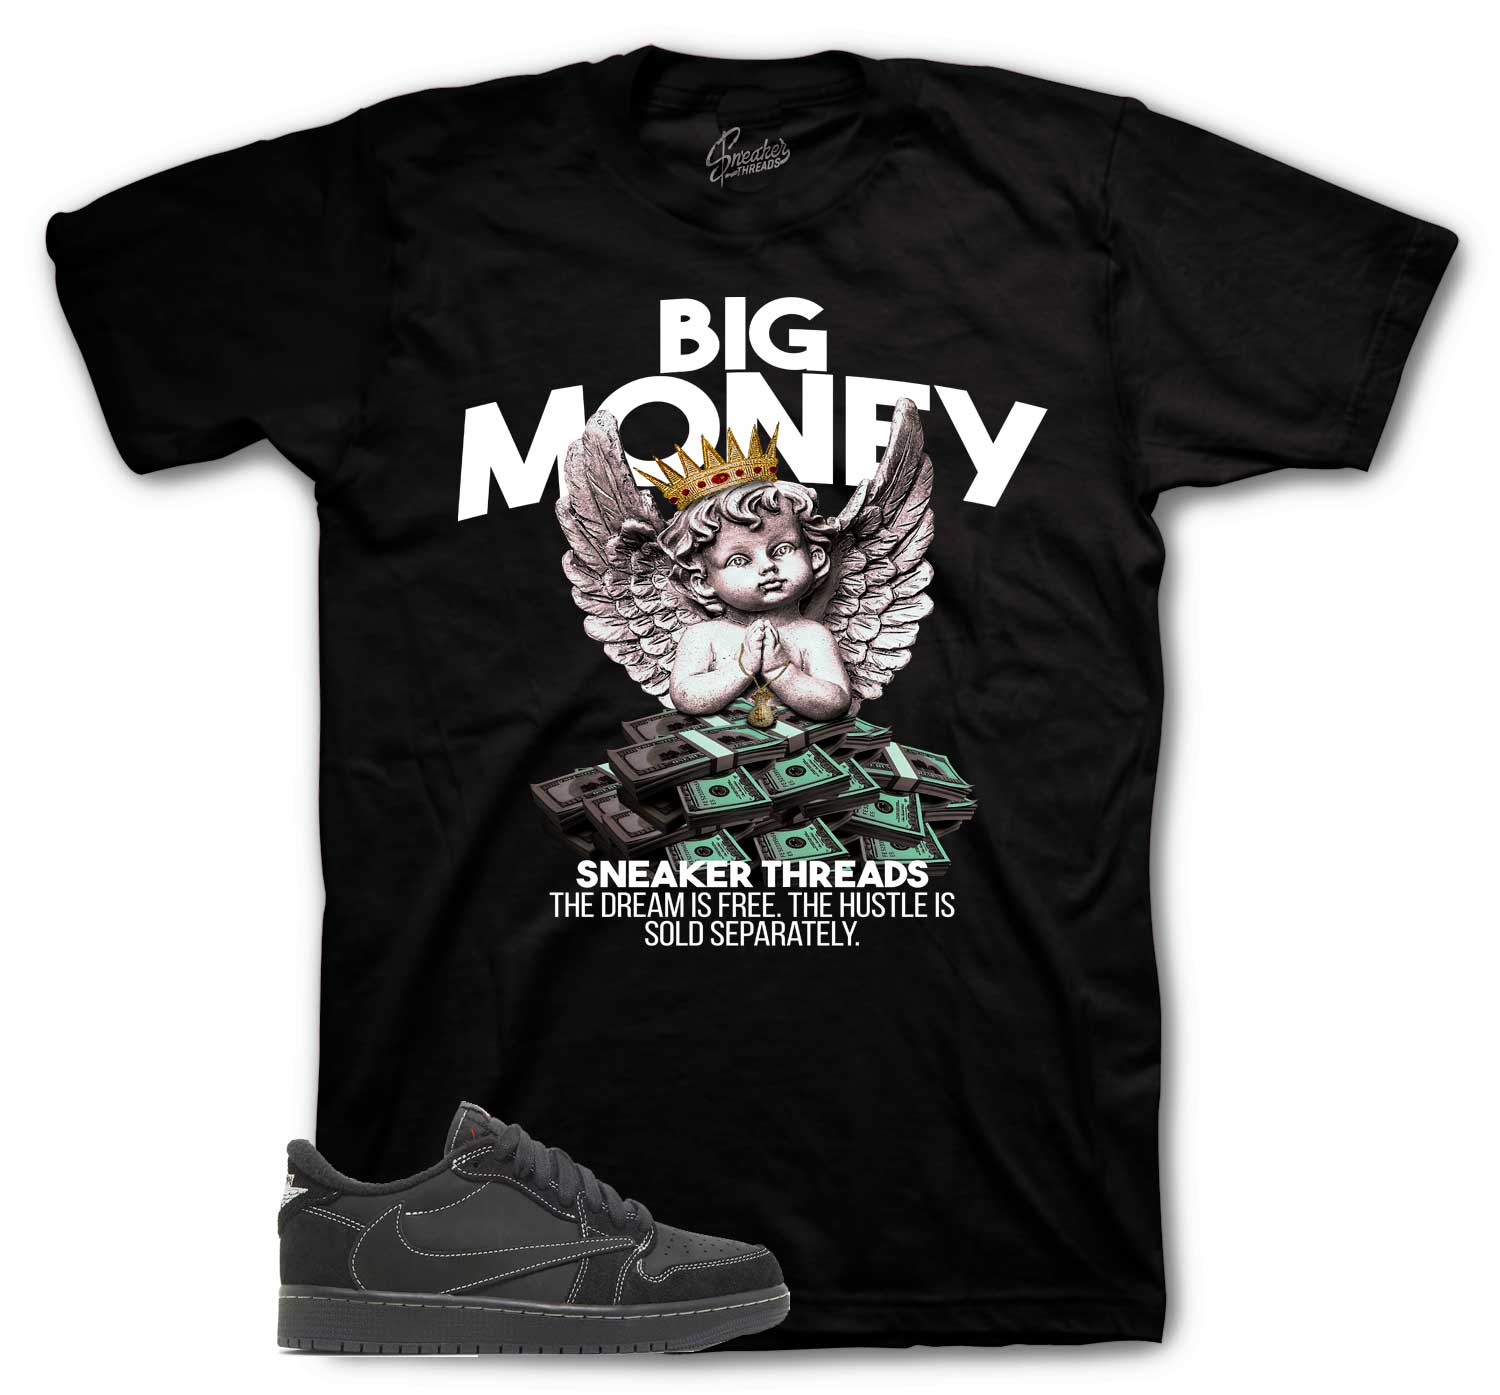 Retro 1 Black Phantom Shirt - Big Money - Black